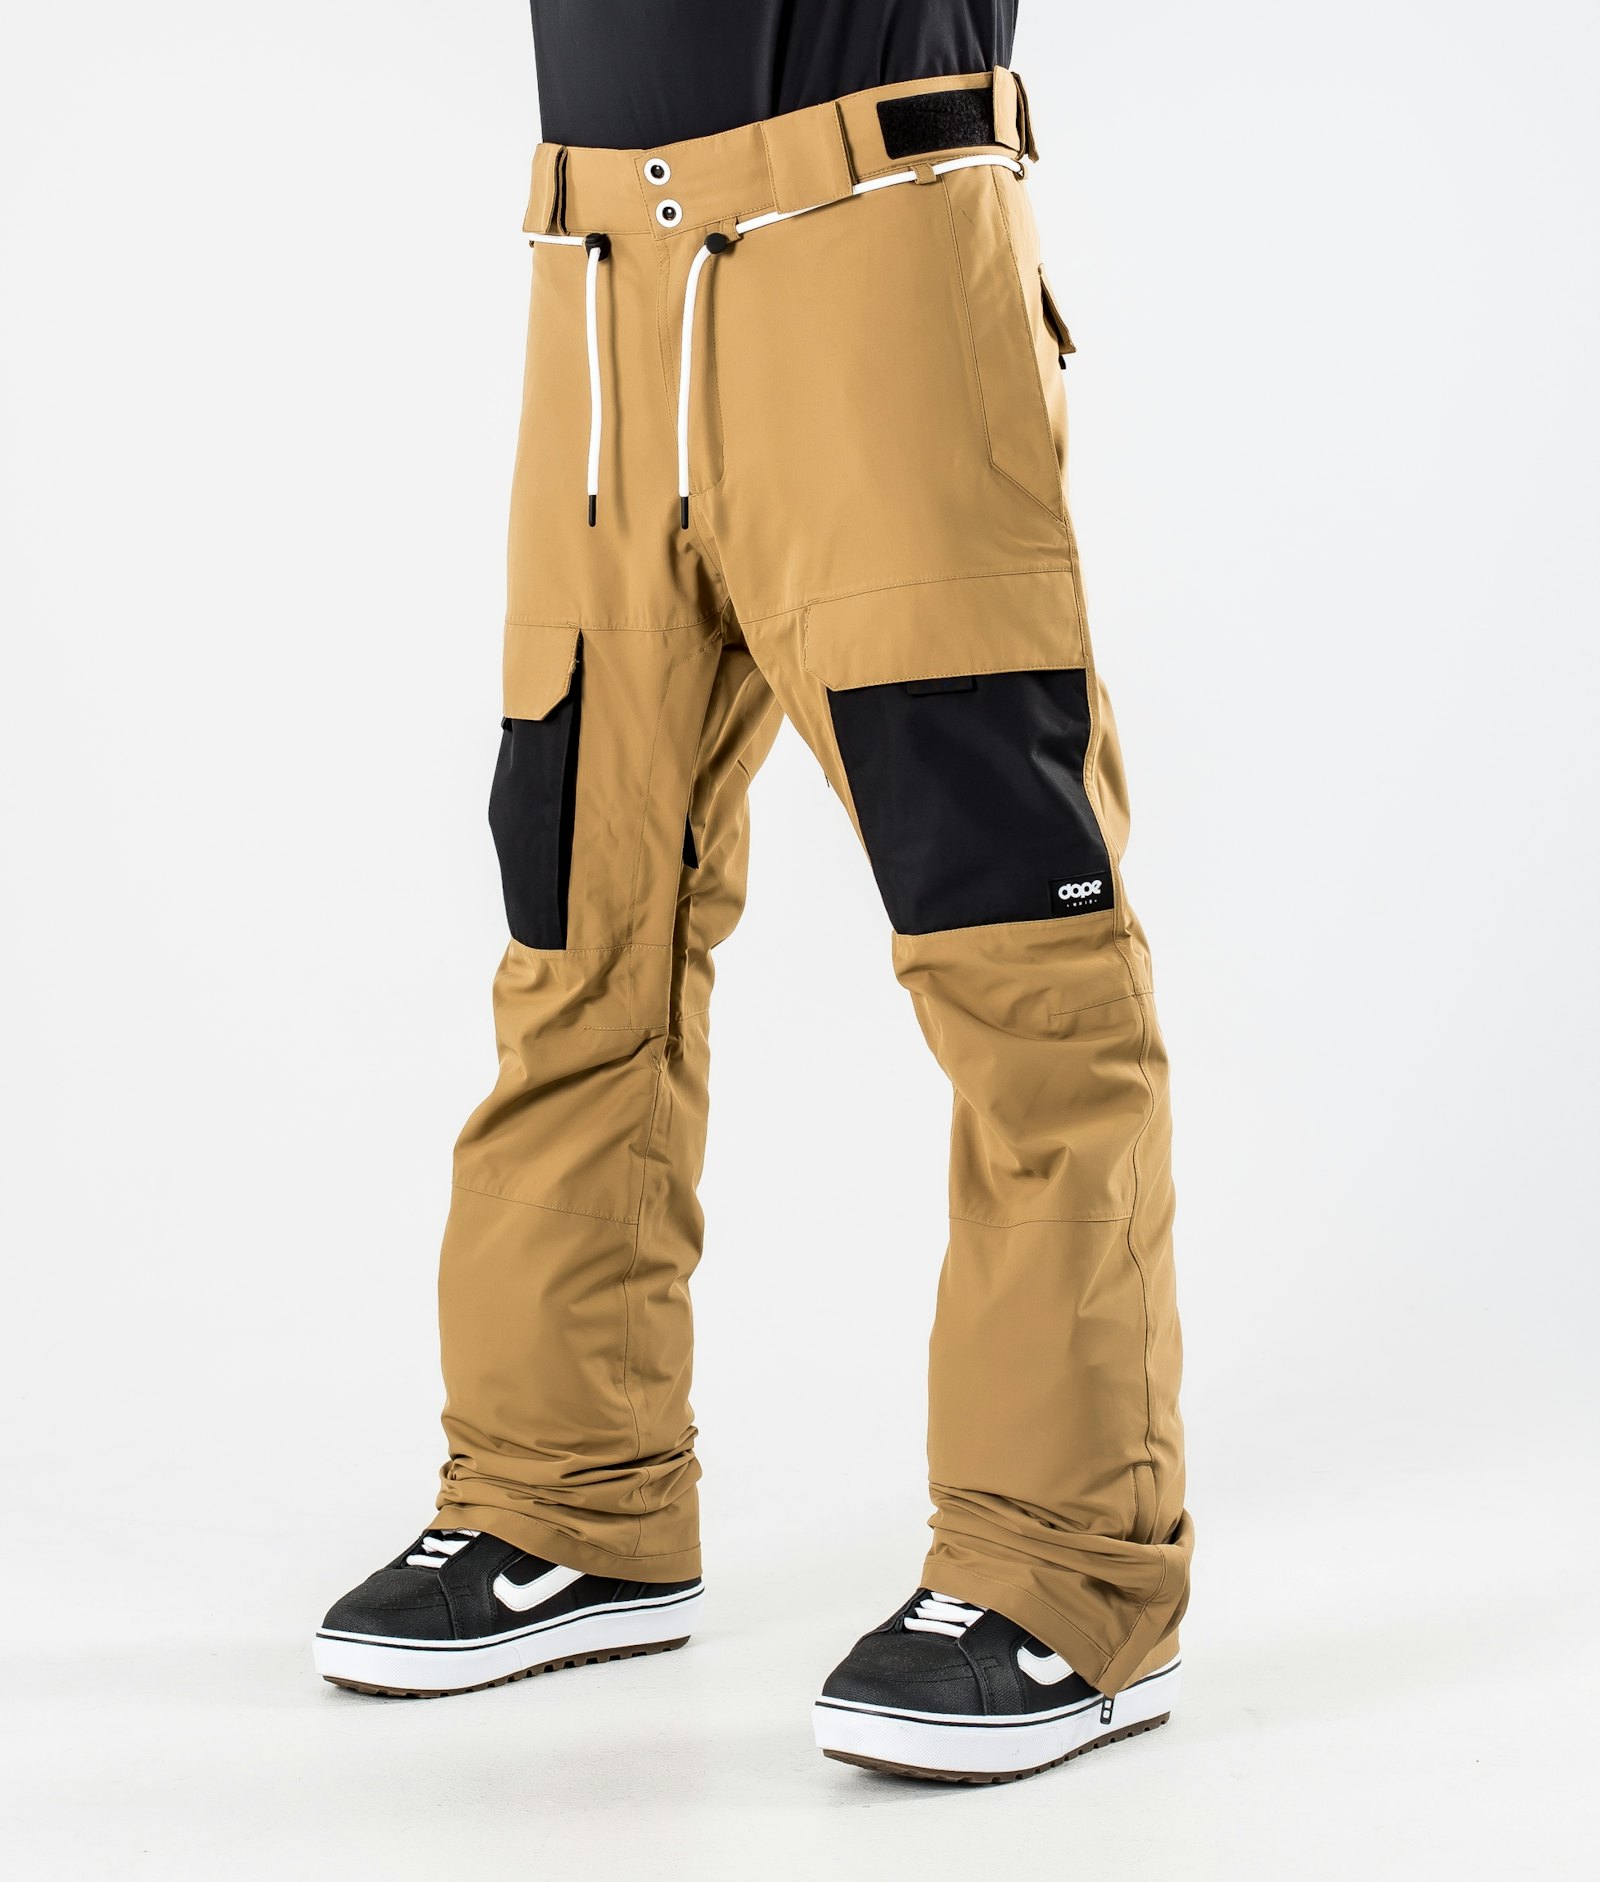 Poise Snowboard Pants Men Gold/Black